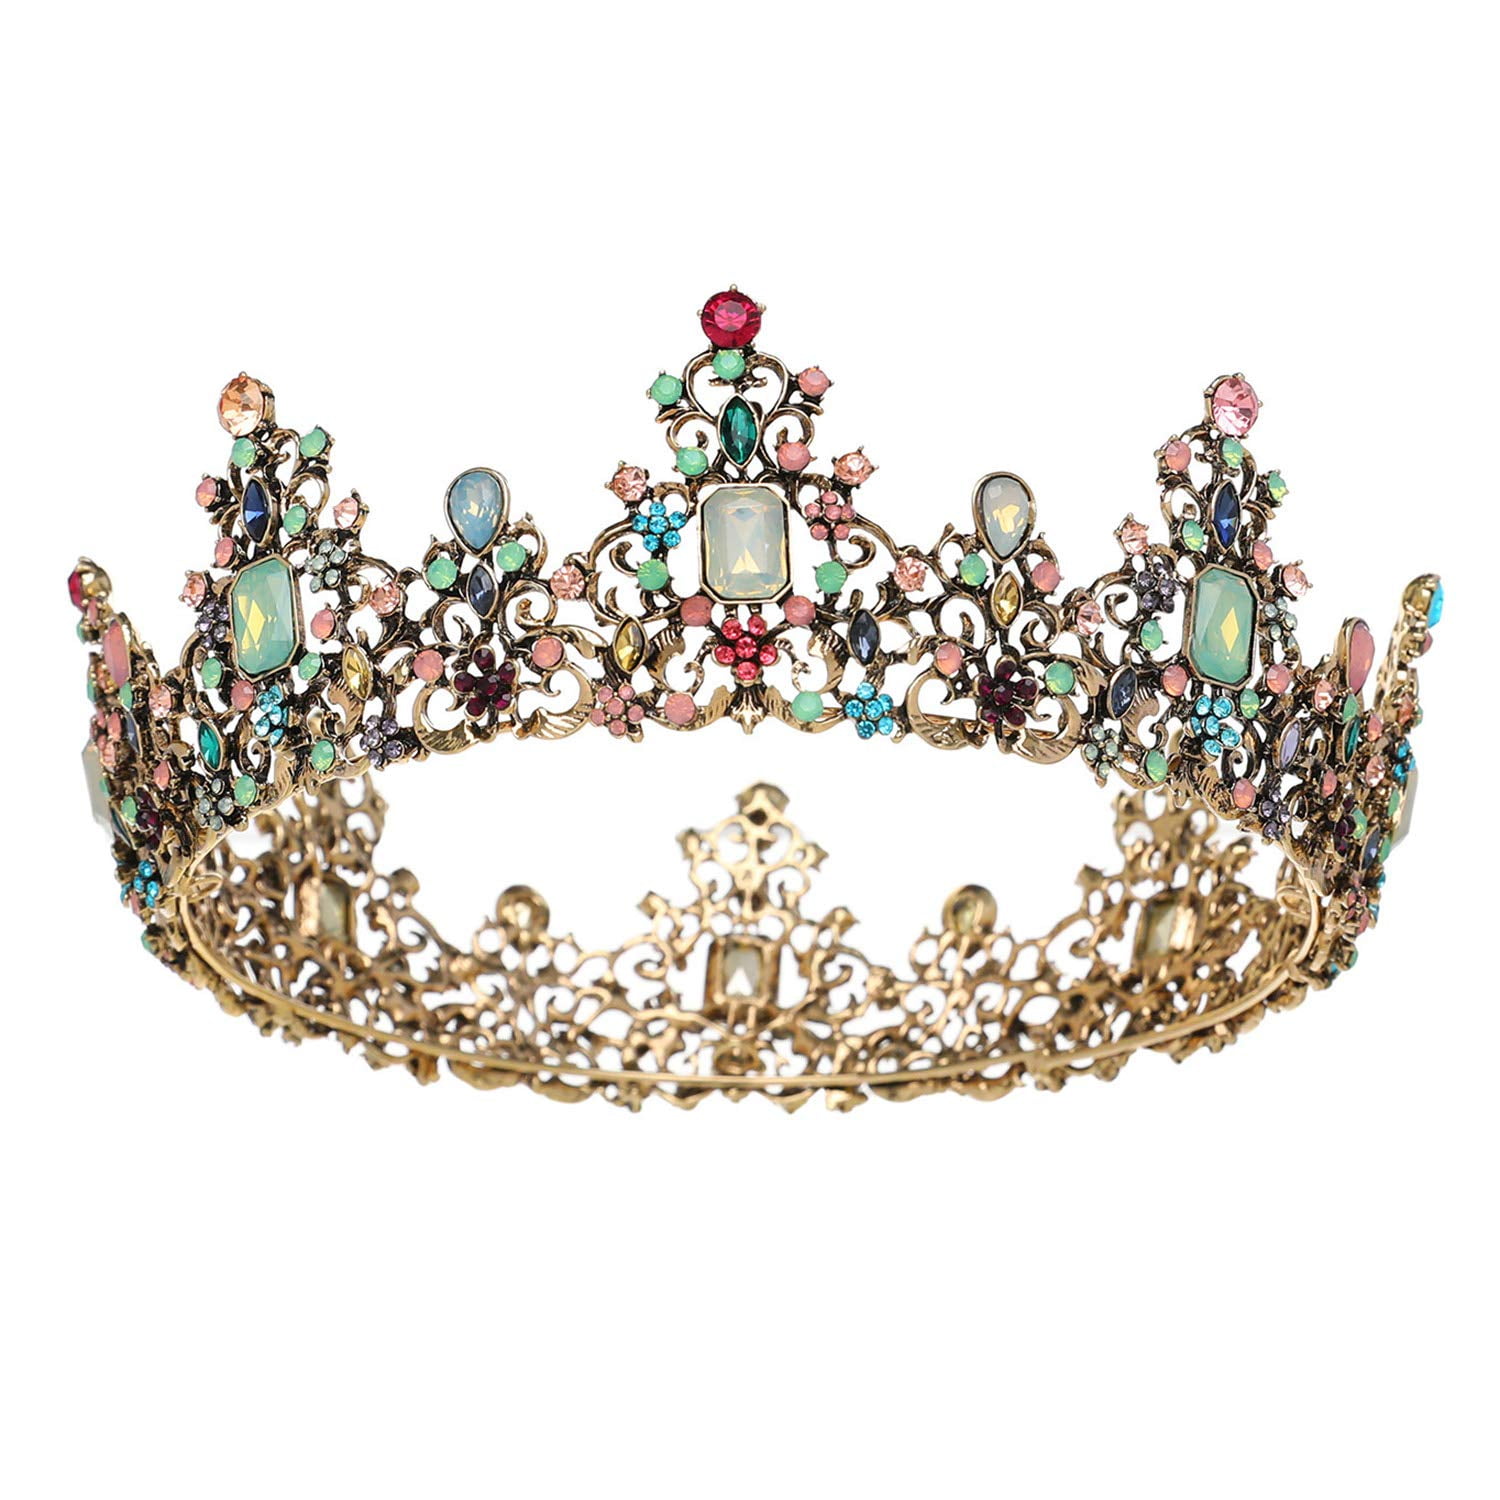 Baroque Wedding Bridal Queen Full Crown Tiara Rhinestone Hair Access Jewelry